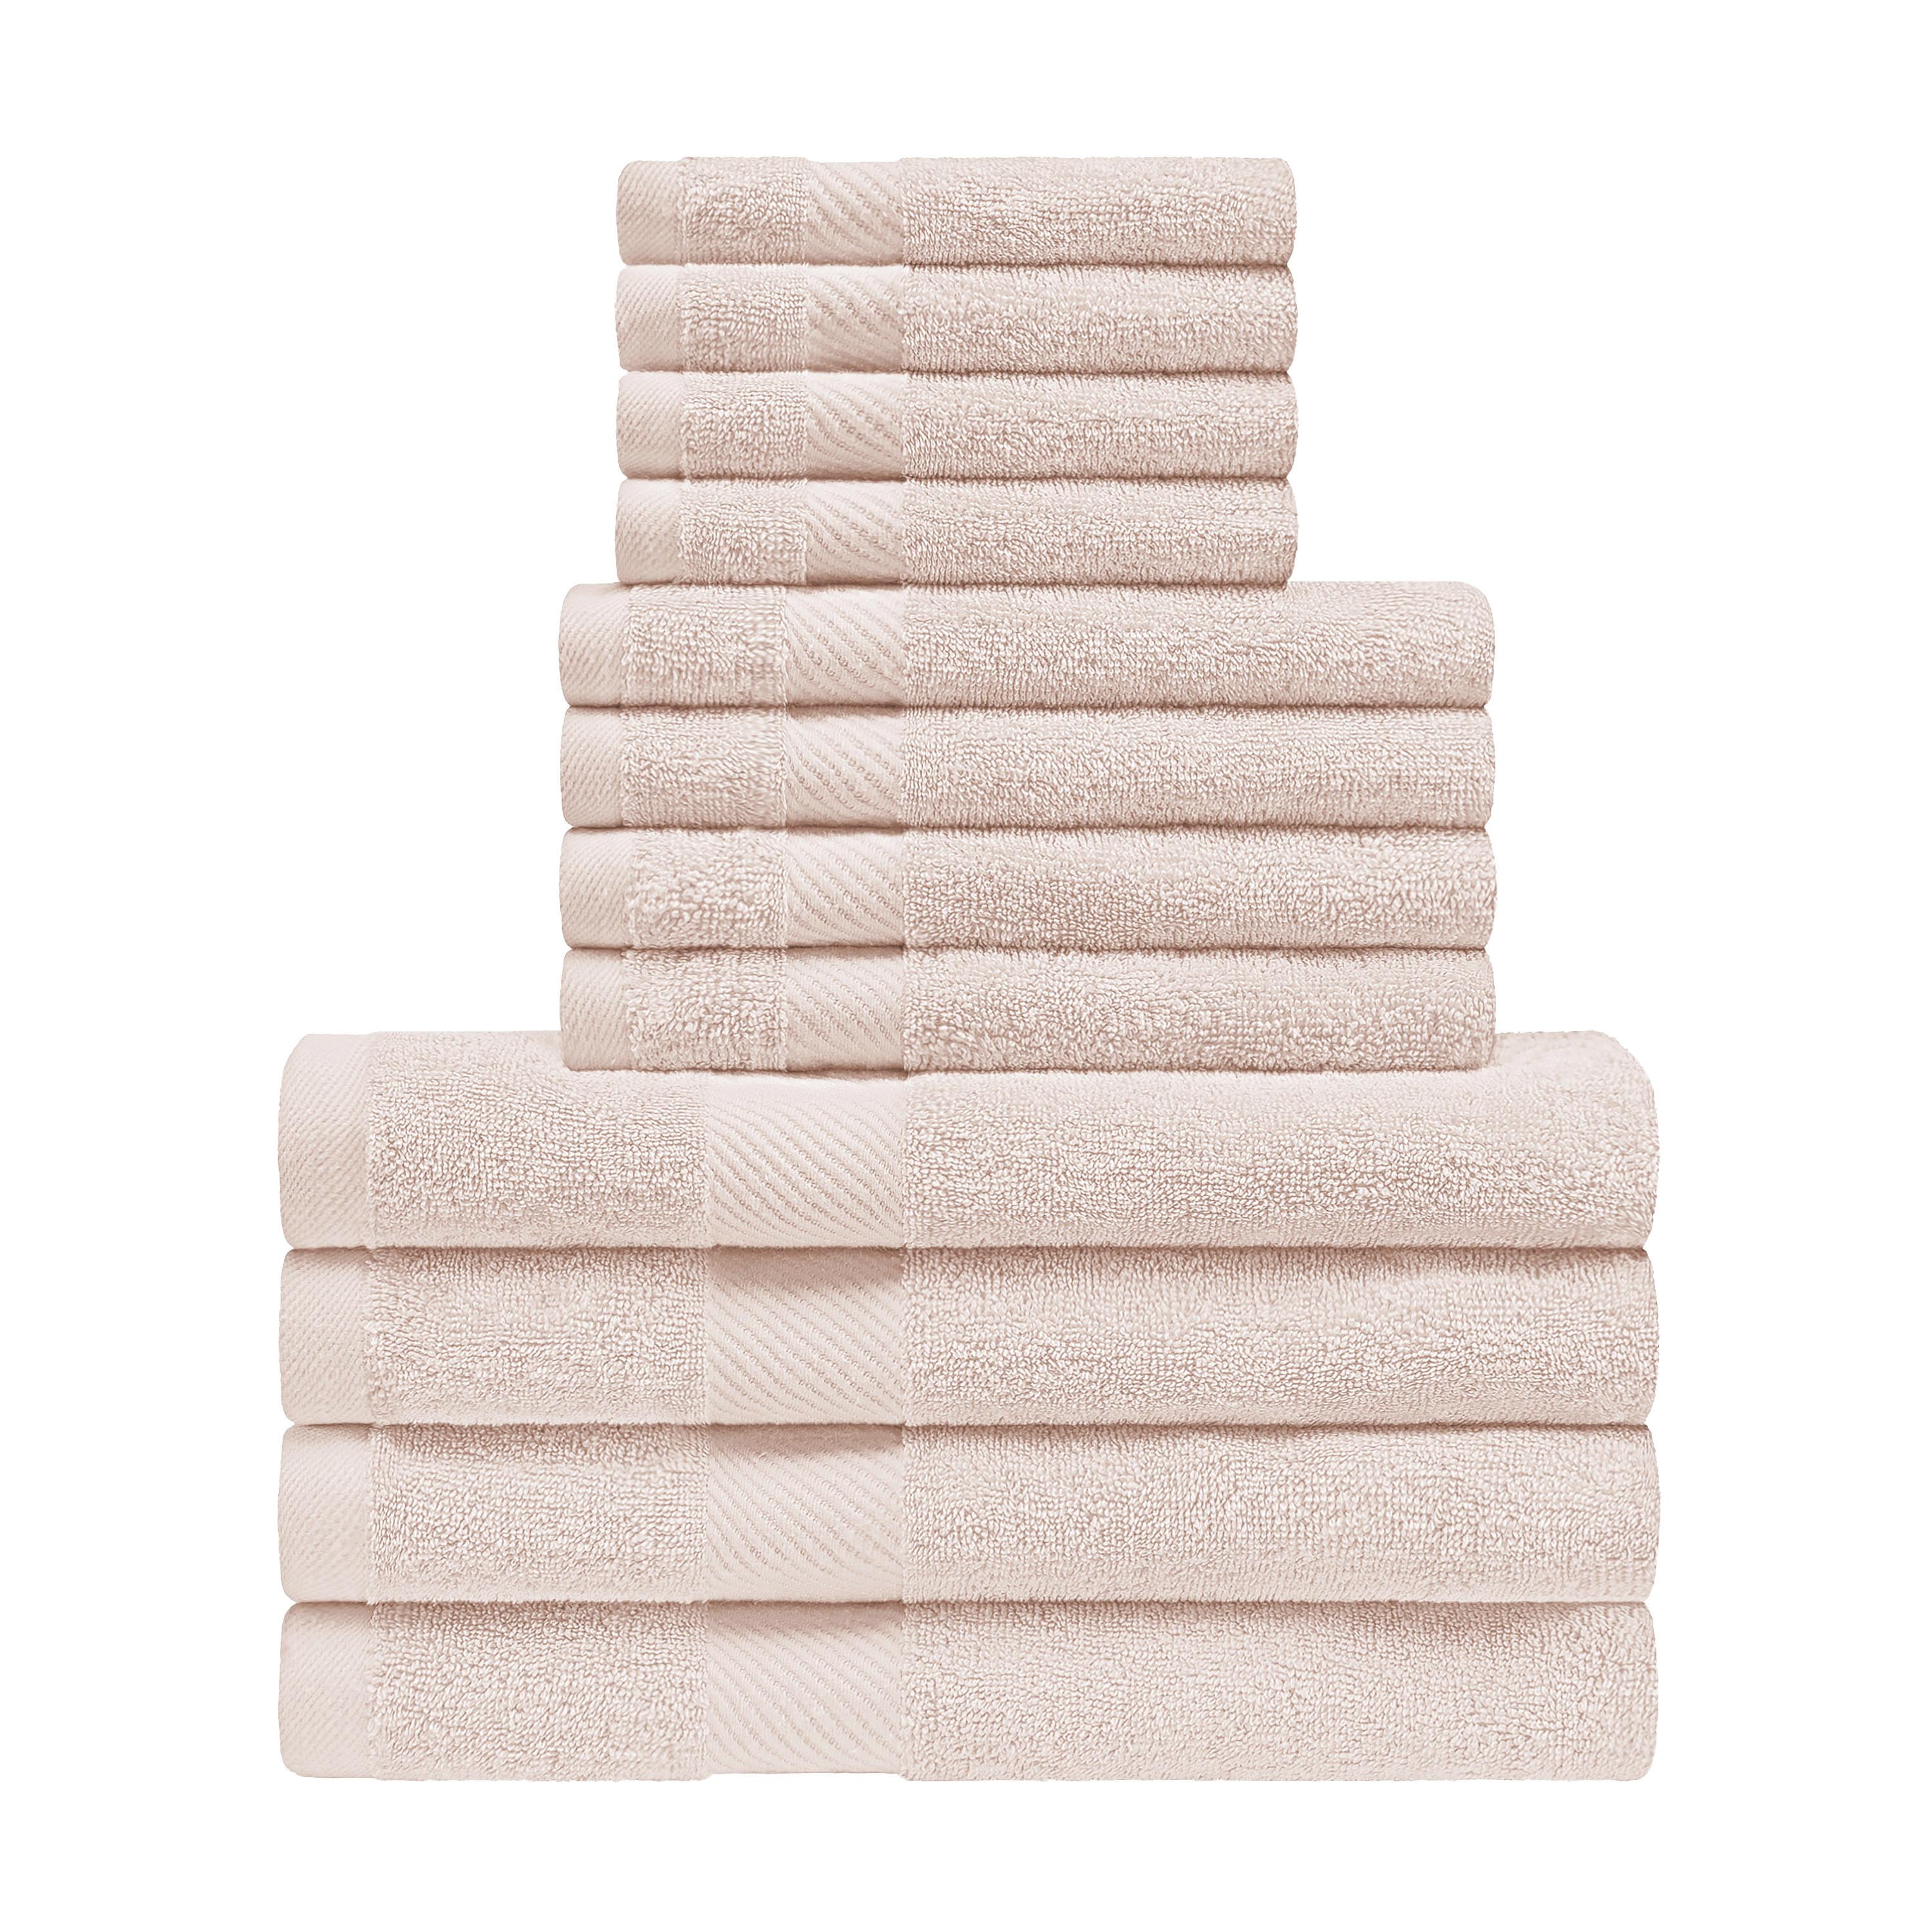 Home Decorators Collection Egyptian Cotton 12-Piece Towel Set in Raindrop